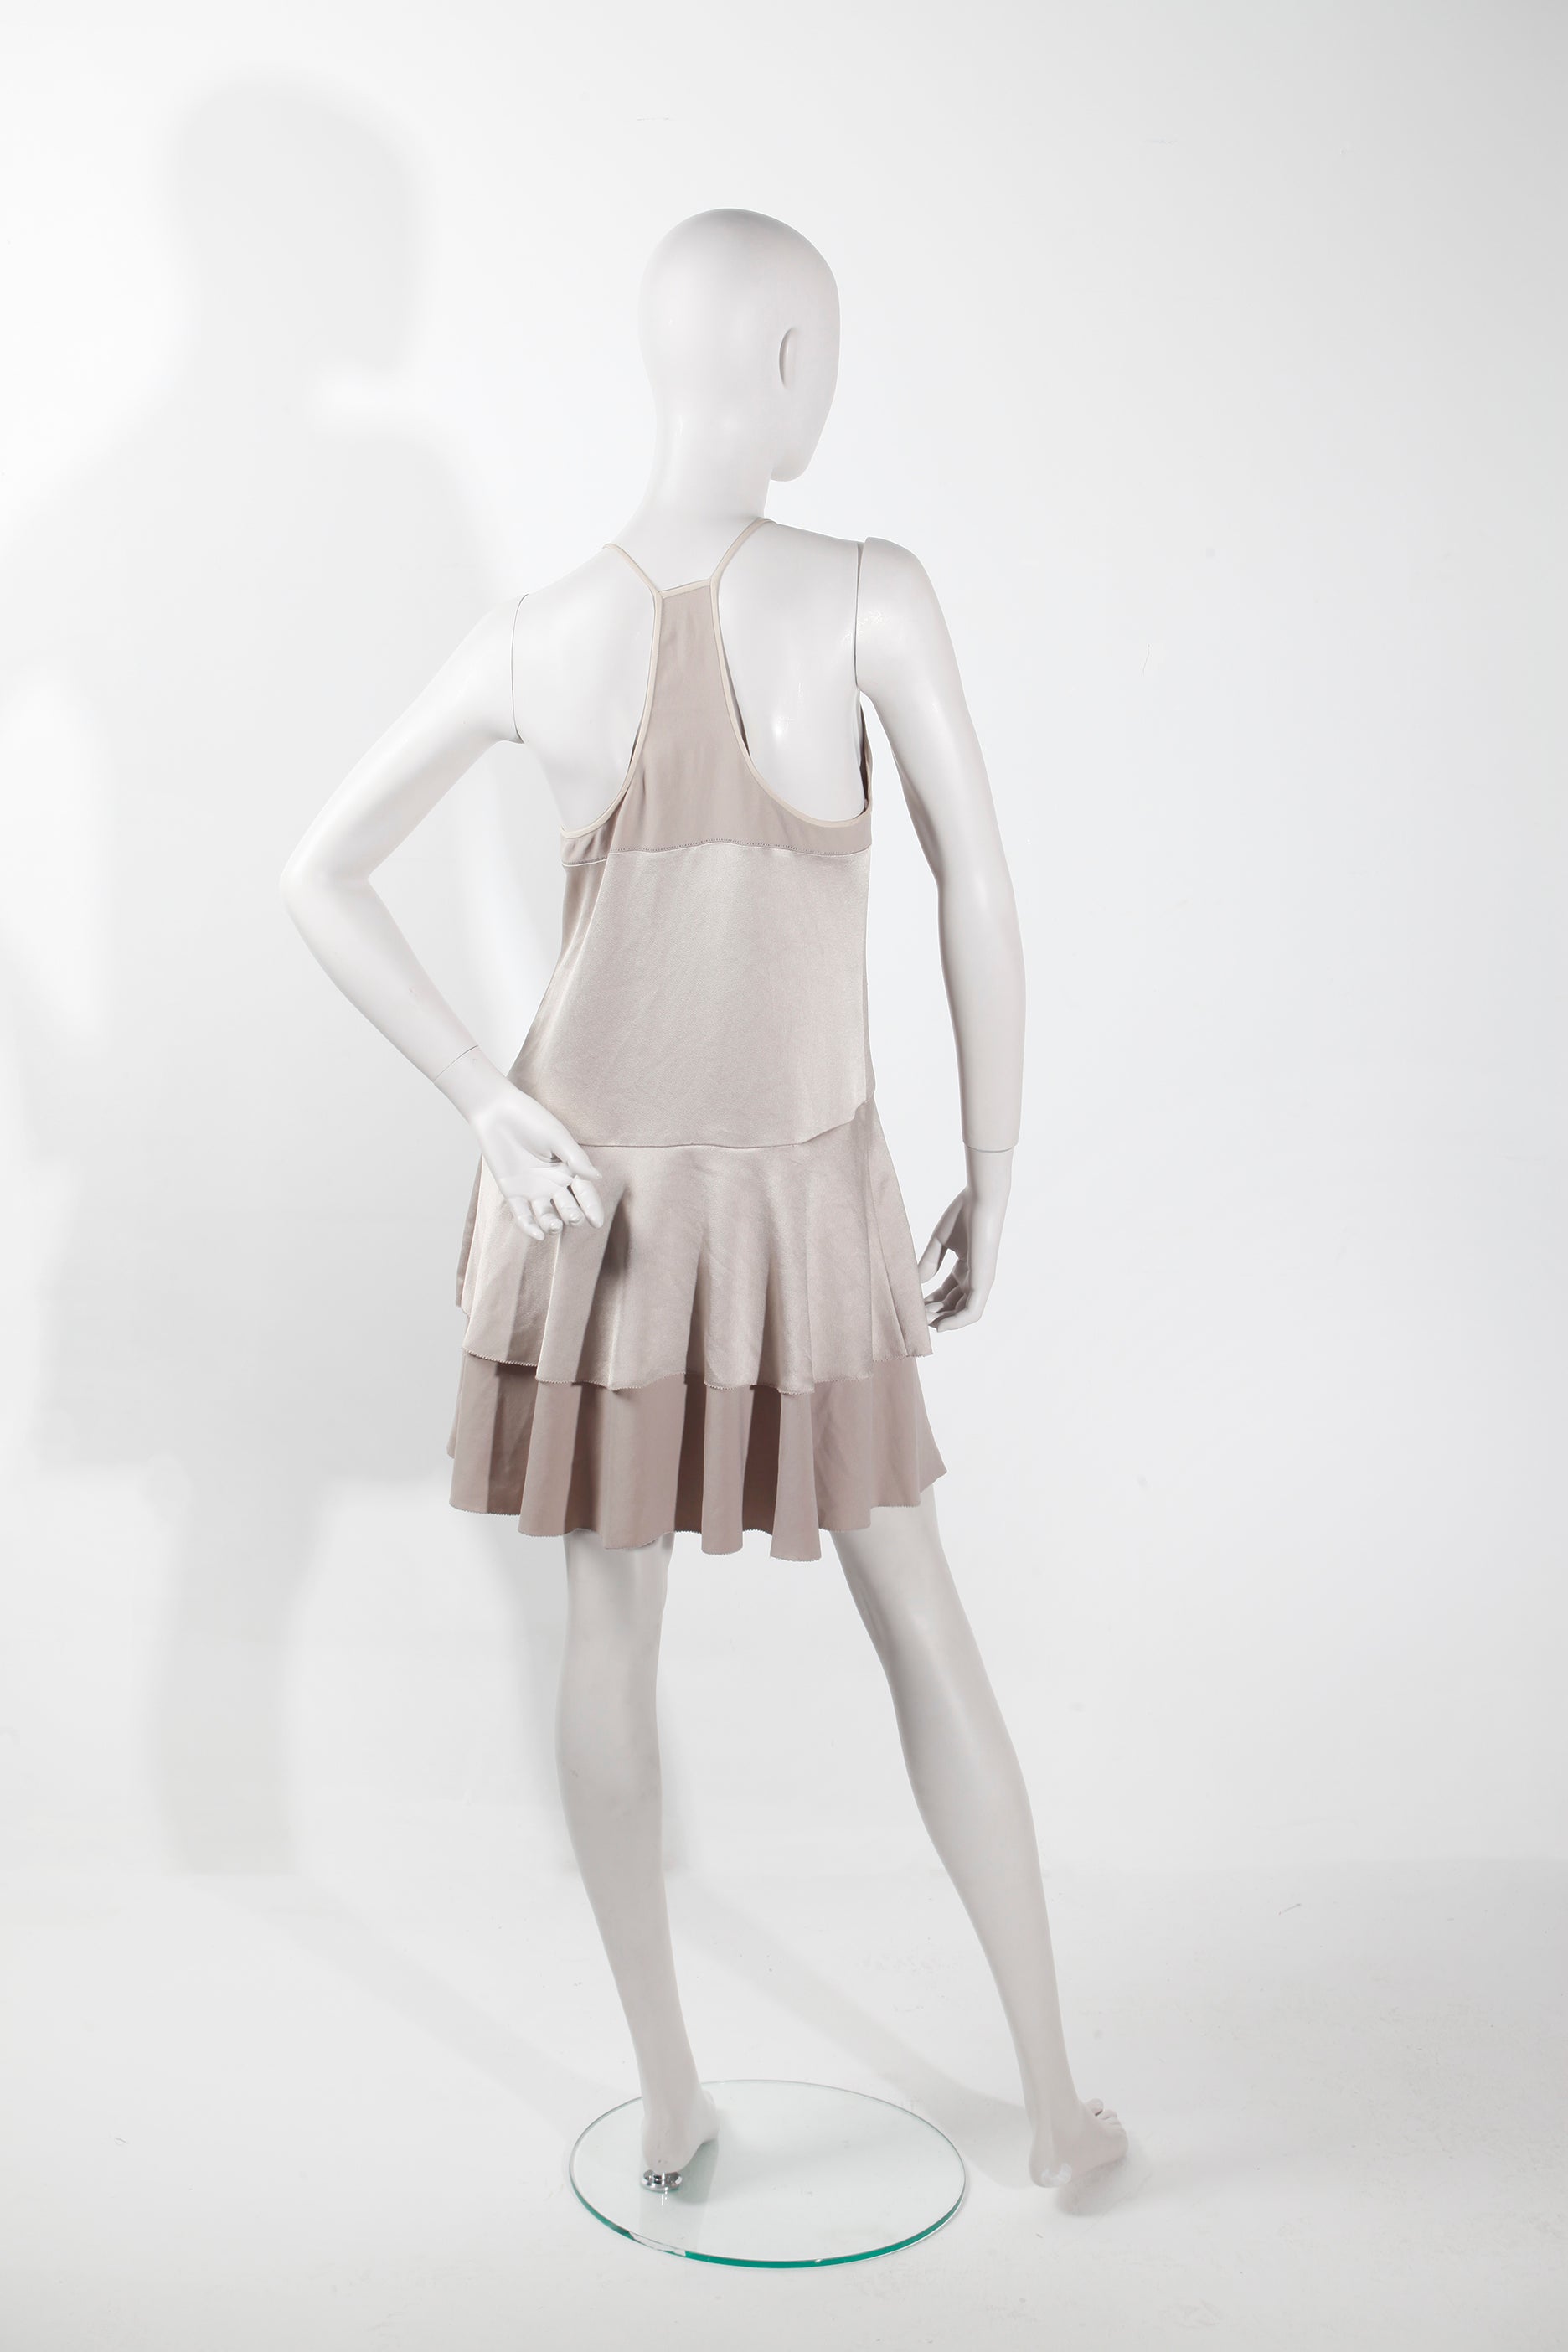 Halston Silver Satin Mini Dress (Eu36-38)